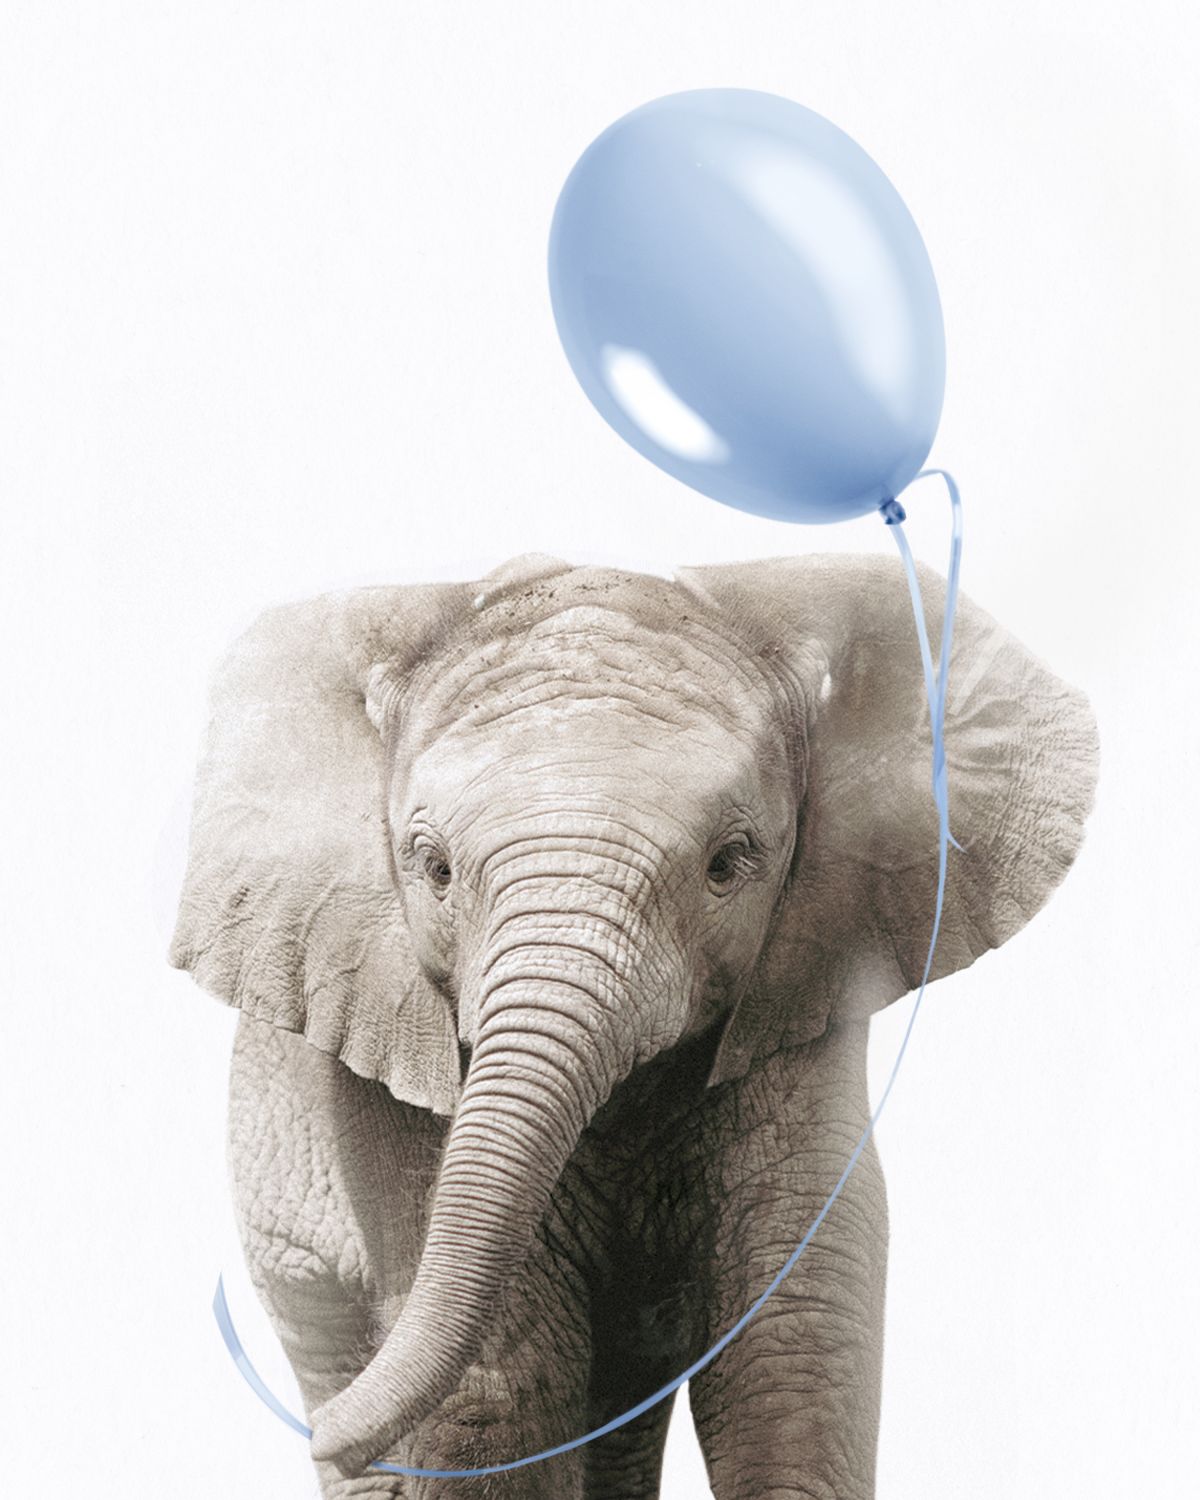 Elephant And Blue Balloon